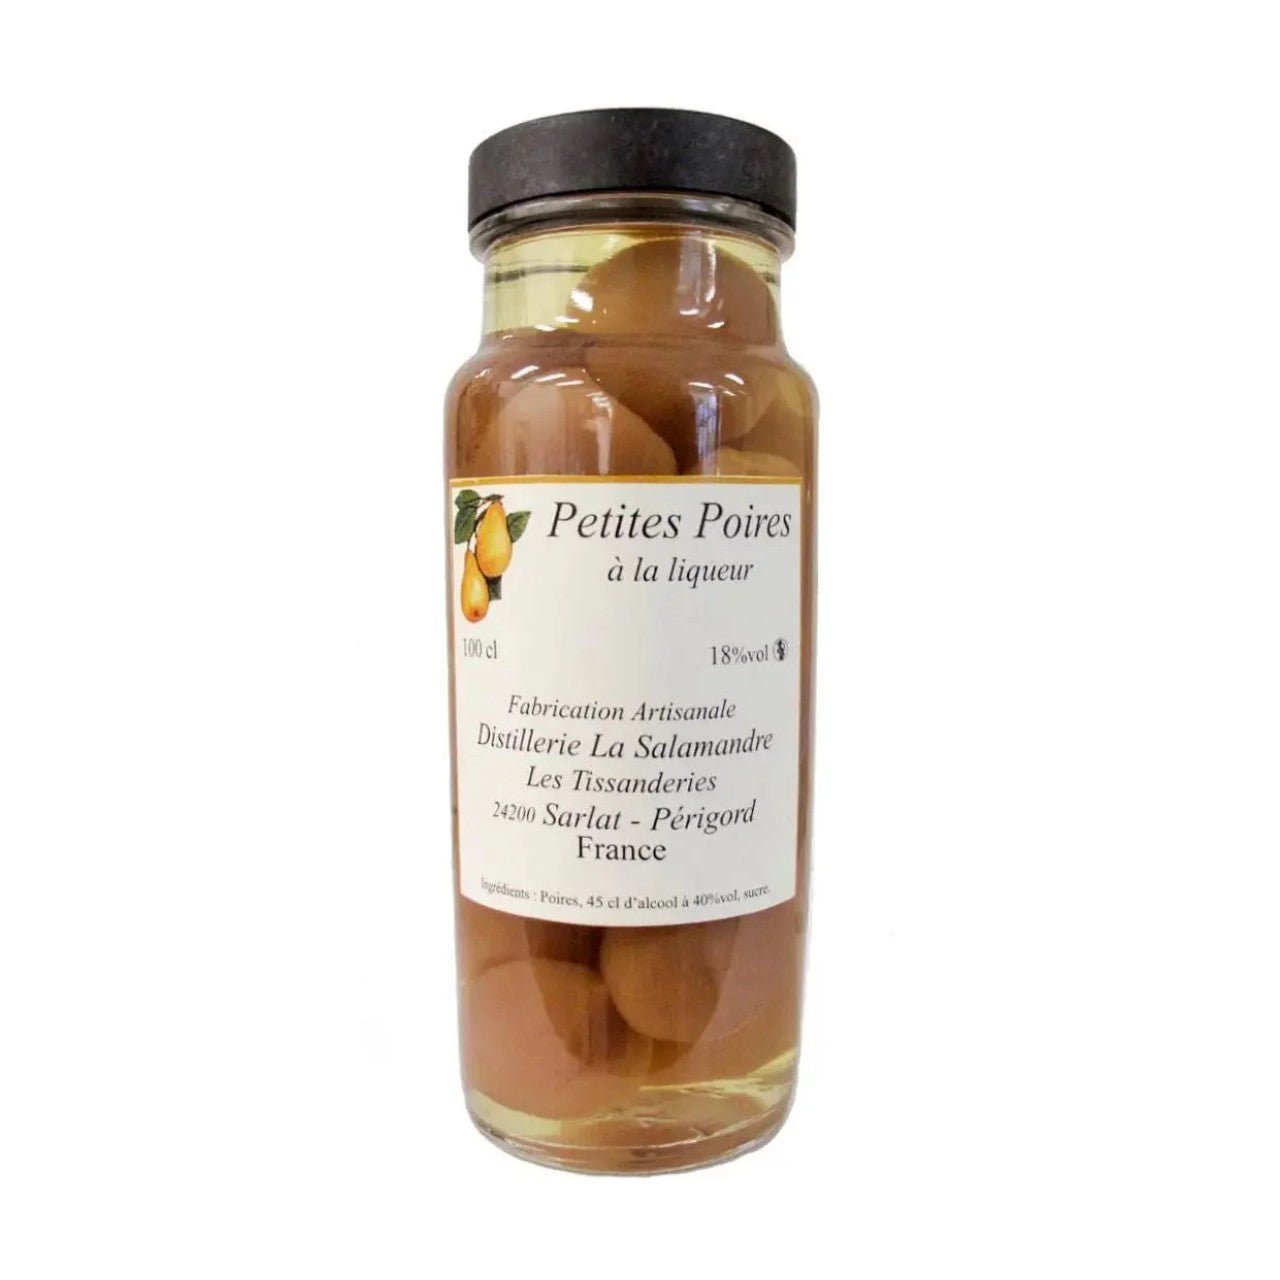 Salamandre Petites Poires a la Liqueur (Tiny Pears in Liqueur) 18% 1000ml - Fruit in Spirits - Liquor Wine Cave